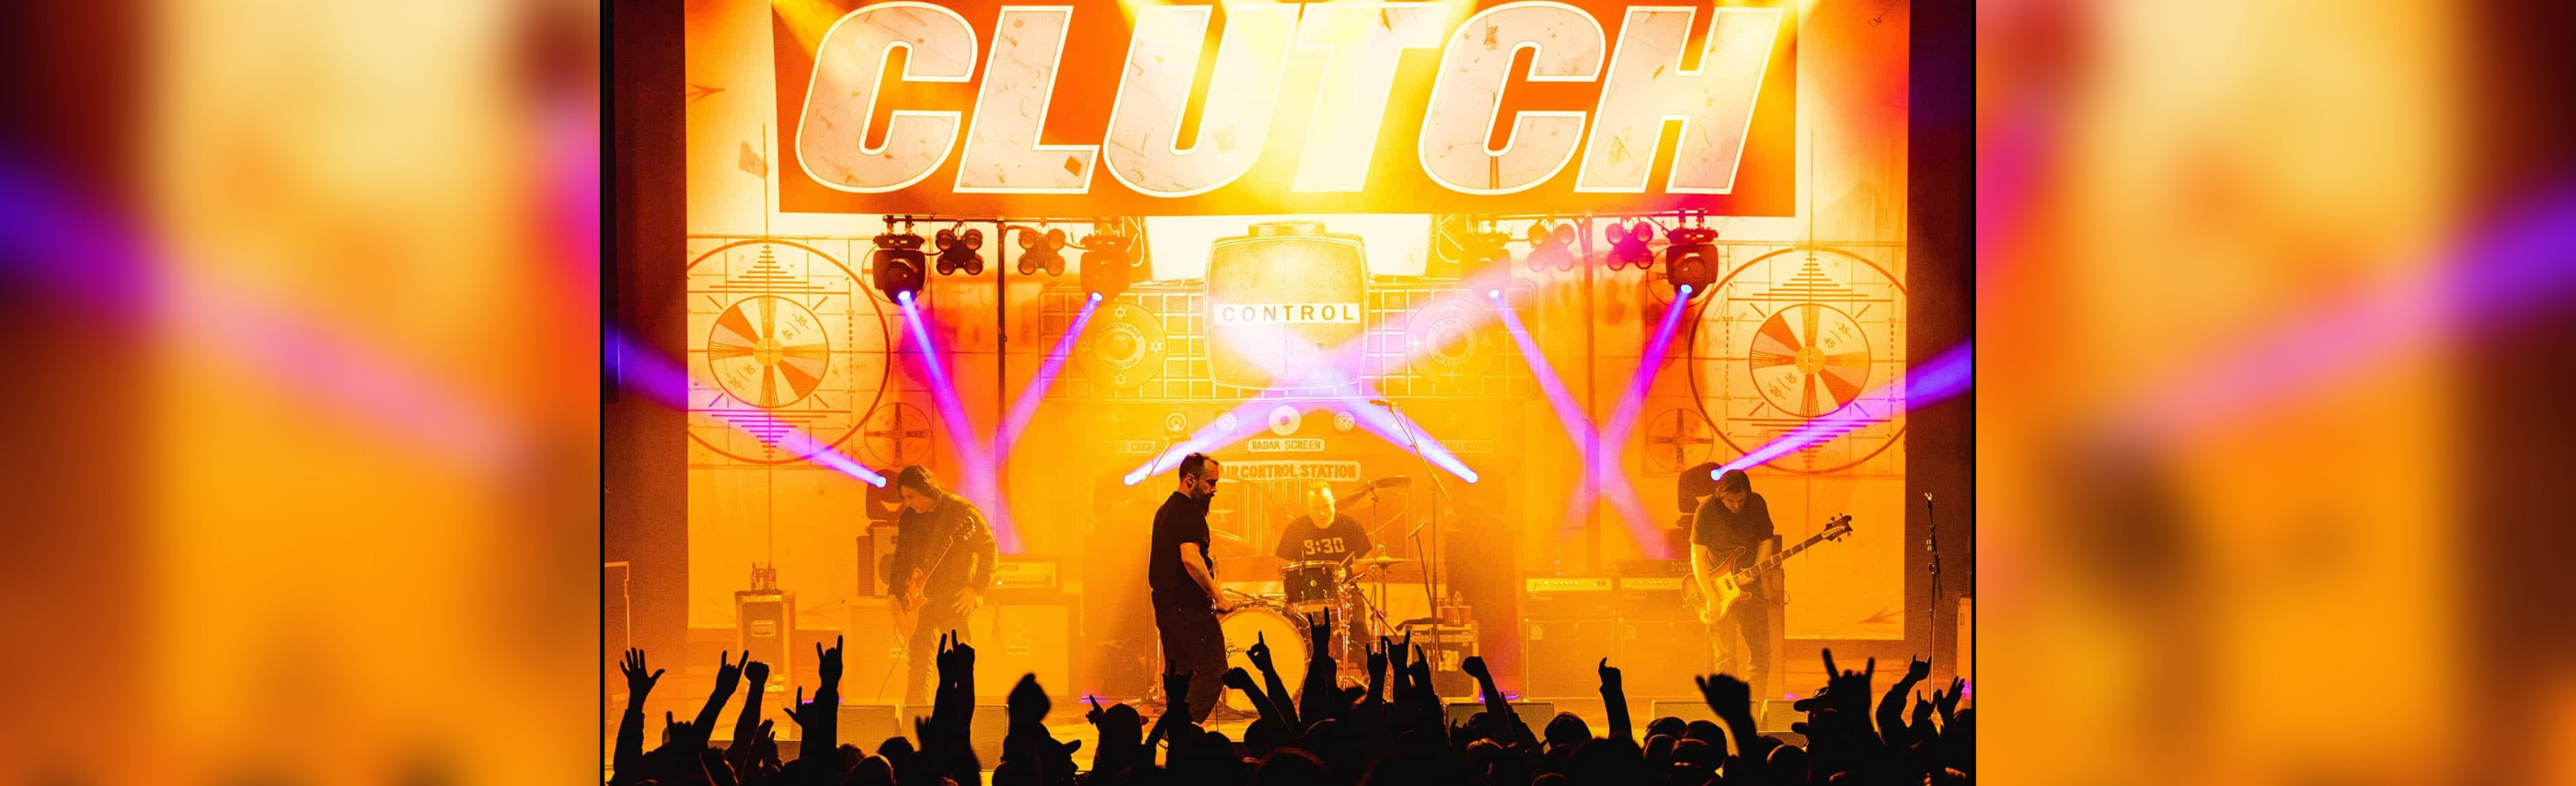 Clutch Tickets + Logjam Merchandise Giveaway Image